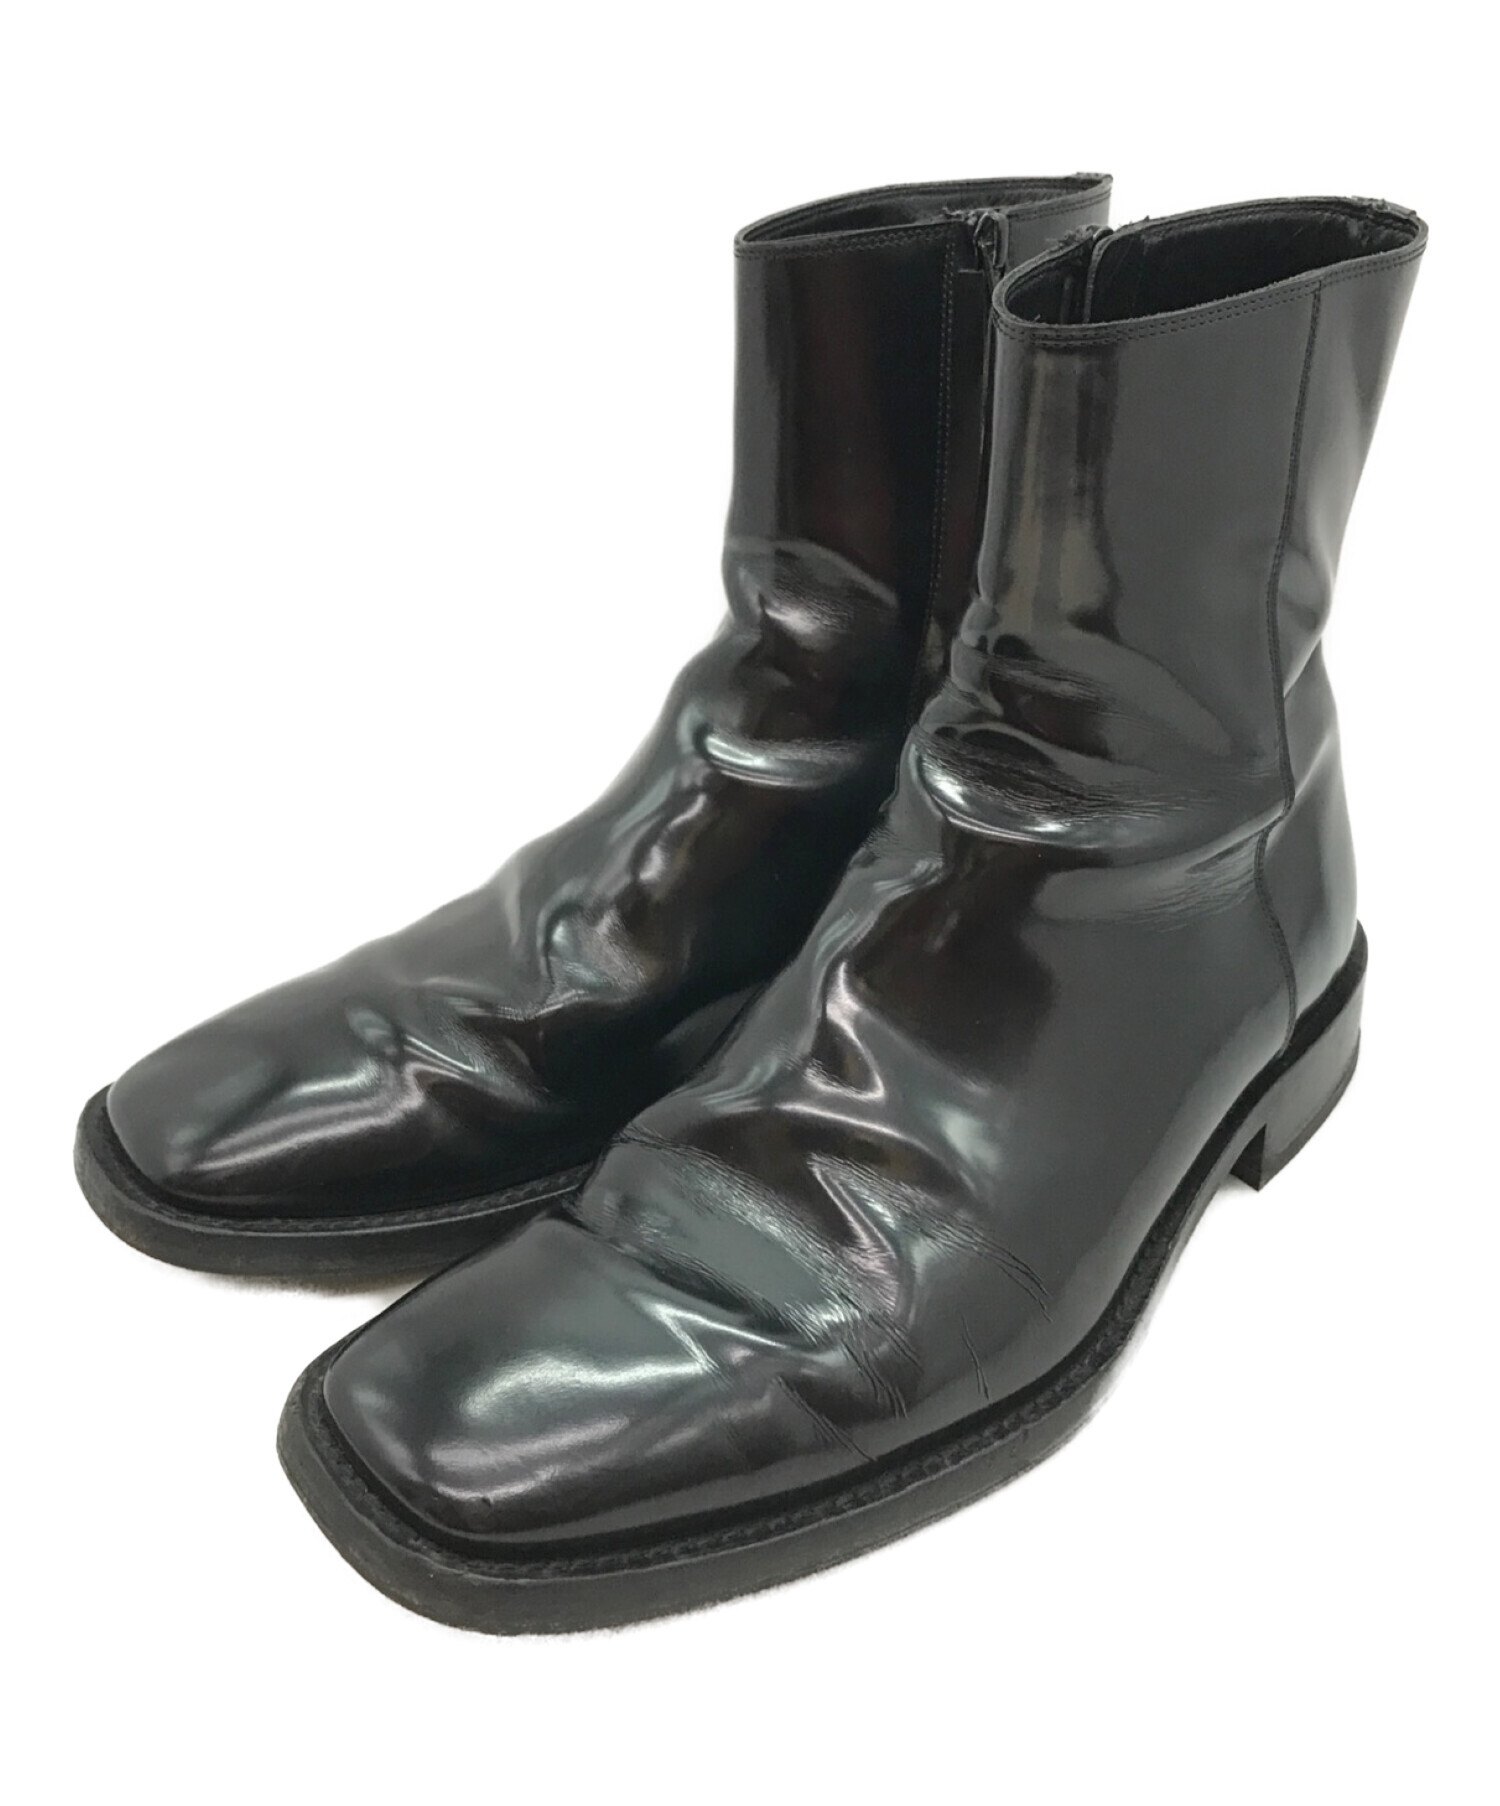 BALENCIAGA (バレンシアガ) リムブーティパテントサイドジップレザーブーツ ブラック サイズ:43 (28.5cm相当)